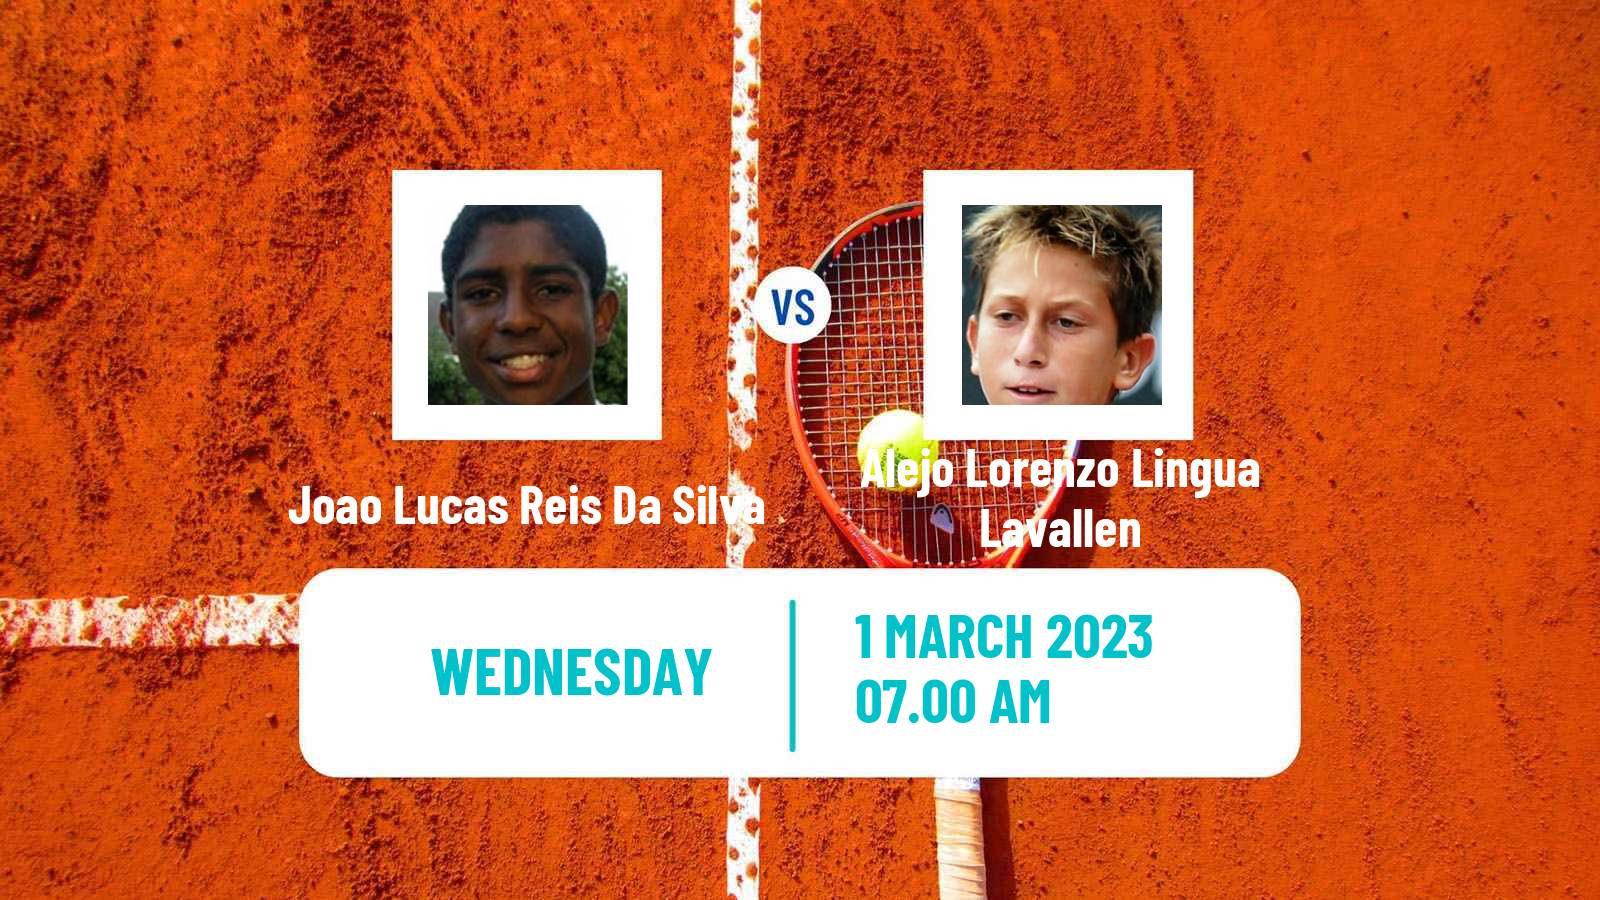 Tennis ITF Tournaments Joao Lucas Reis Da Silva - Alejo Lorenzo Lingua Lavallen